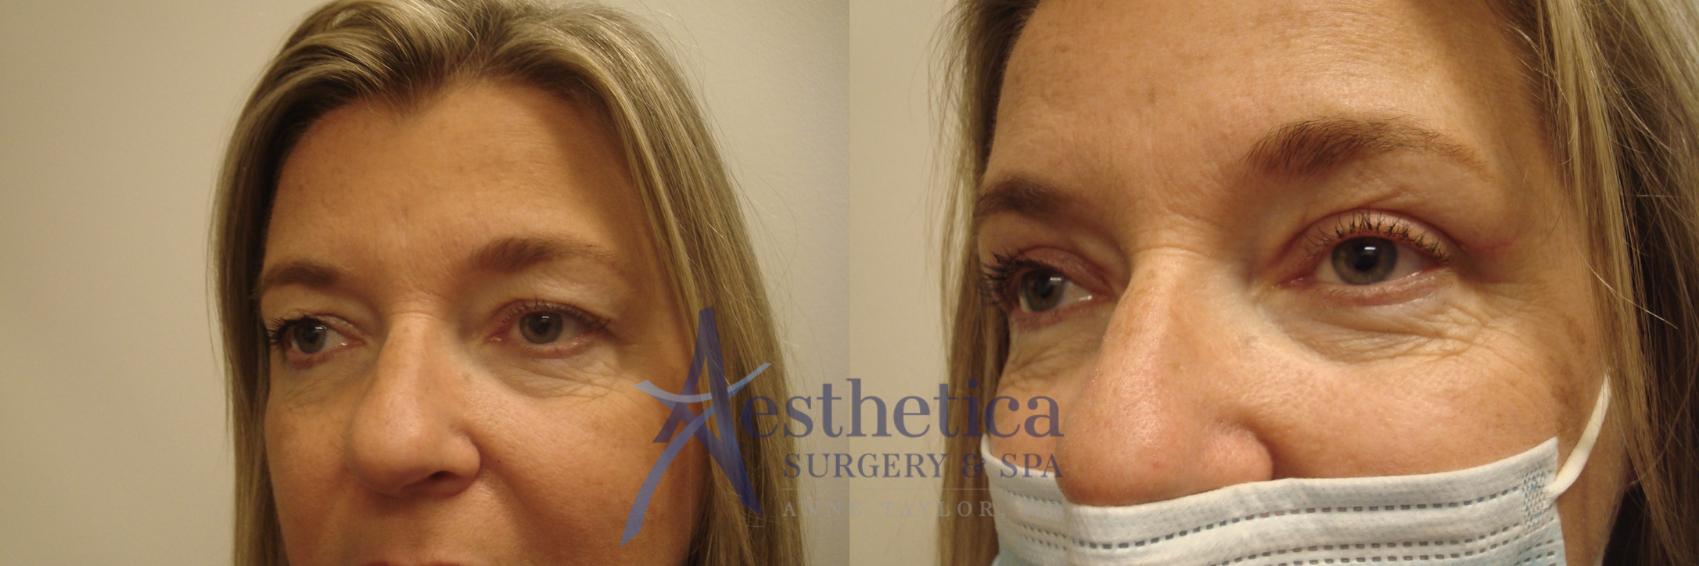 Blepharoplasty (Eyelid Surgery) Case 524 Before & After Left Oblique | Worthington, OH | Aesthetica Surgery & Spa